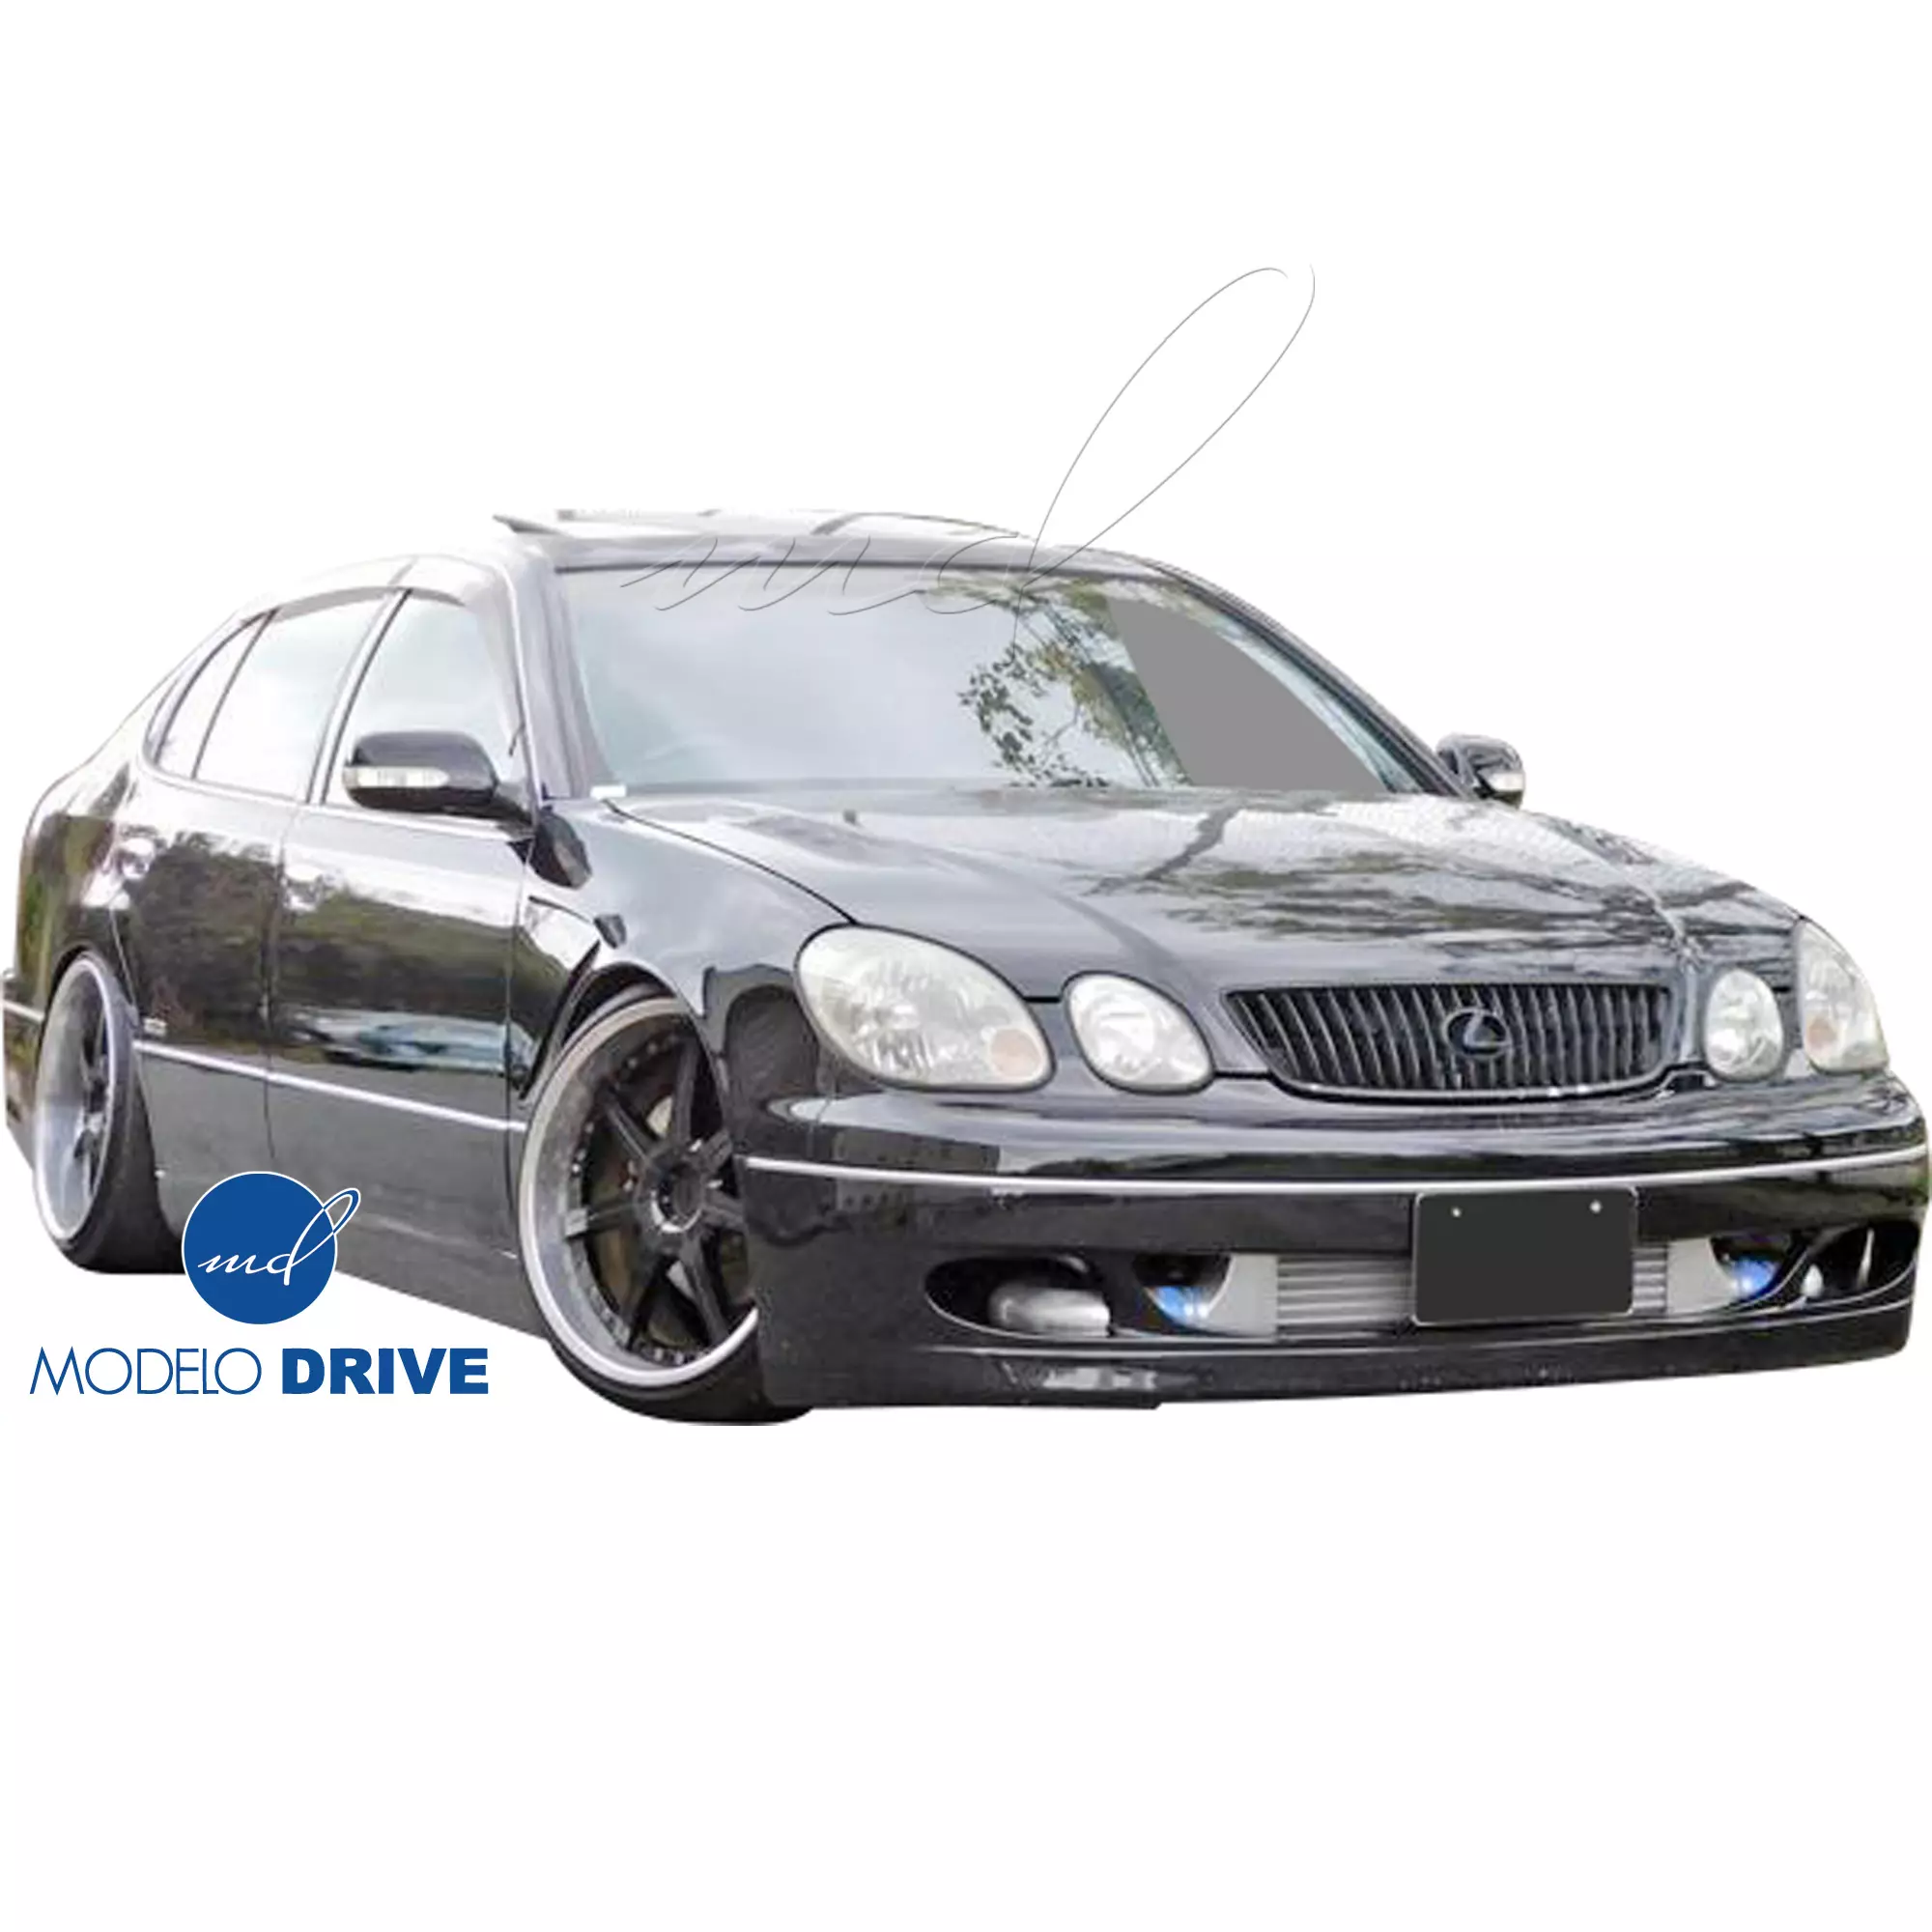 ModeloDrive FRP JUNT Body Kit 4pc > Lexus GS Series GS400 GS300 1998-2005 - Image 3